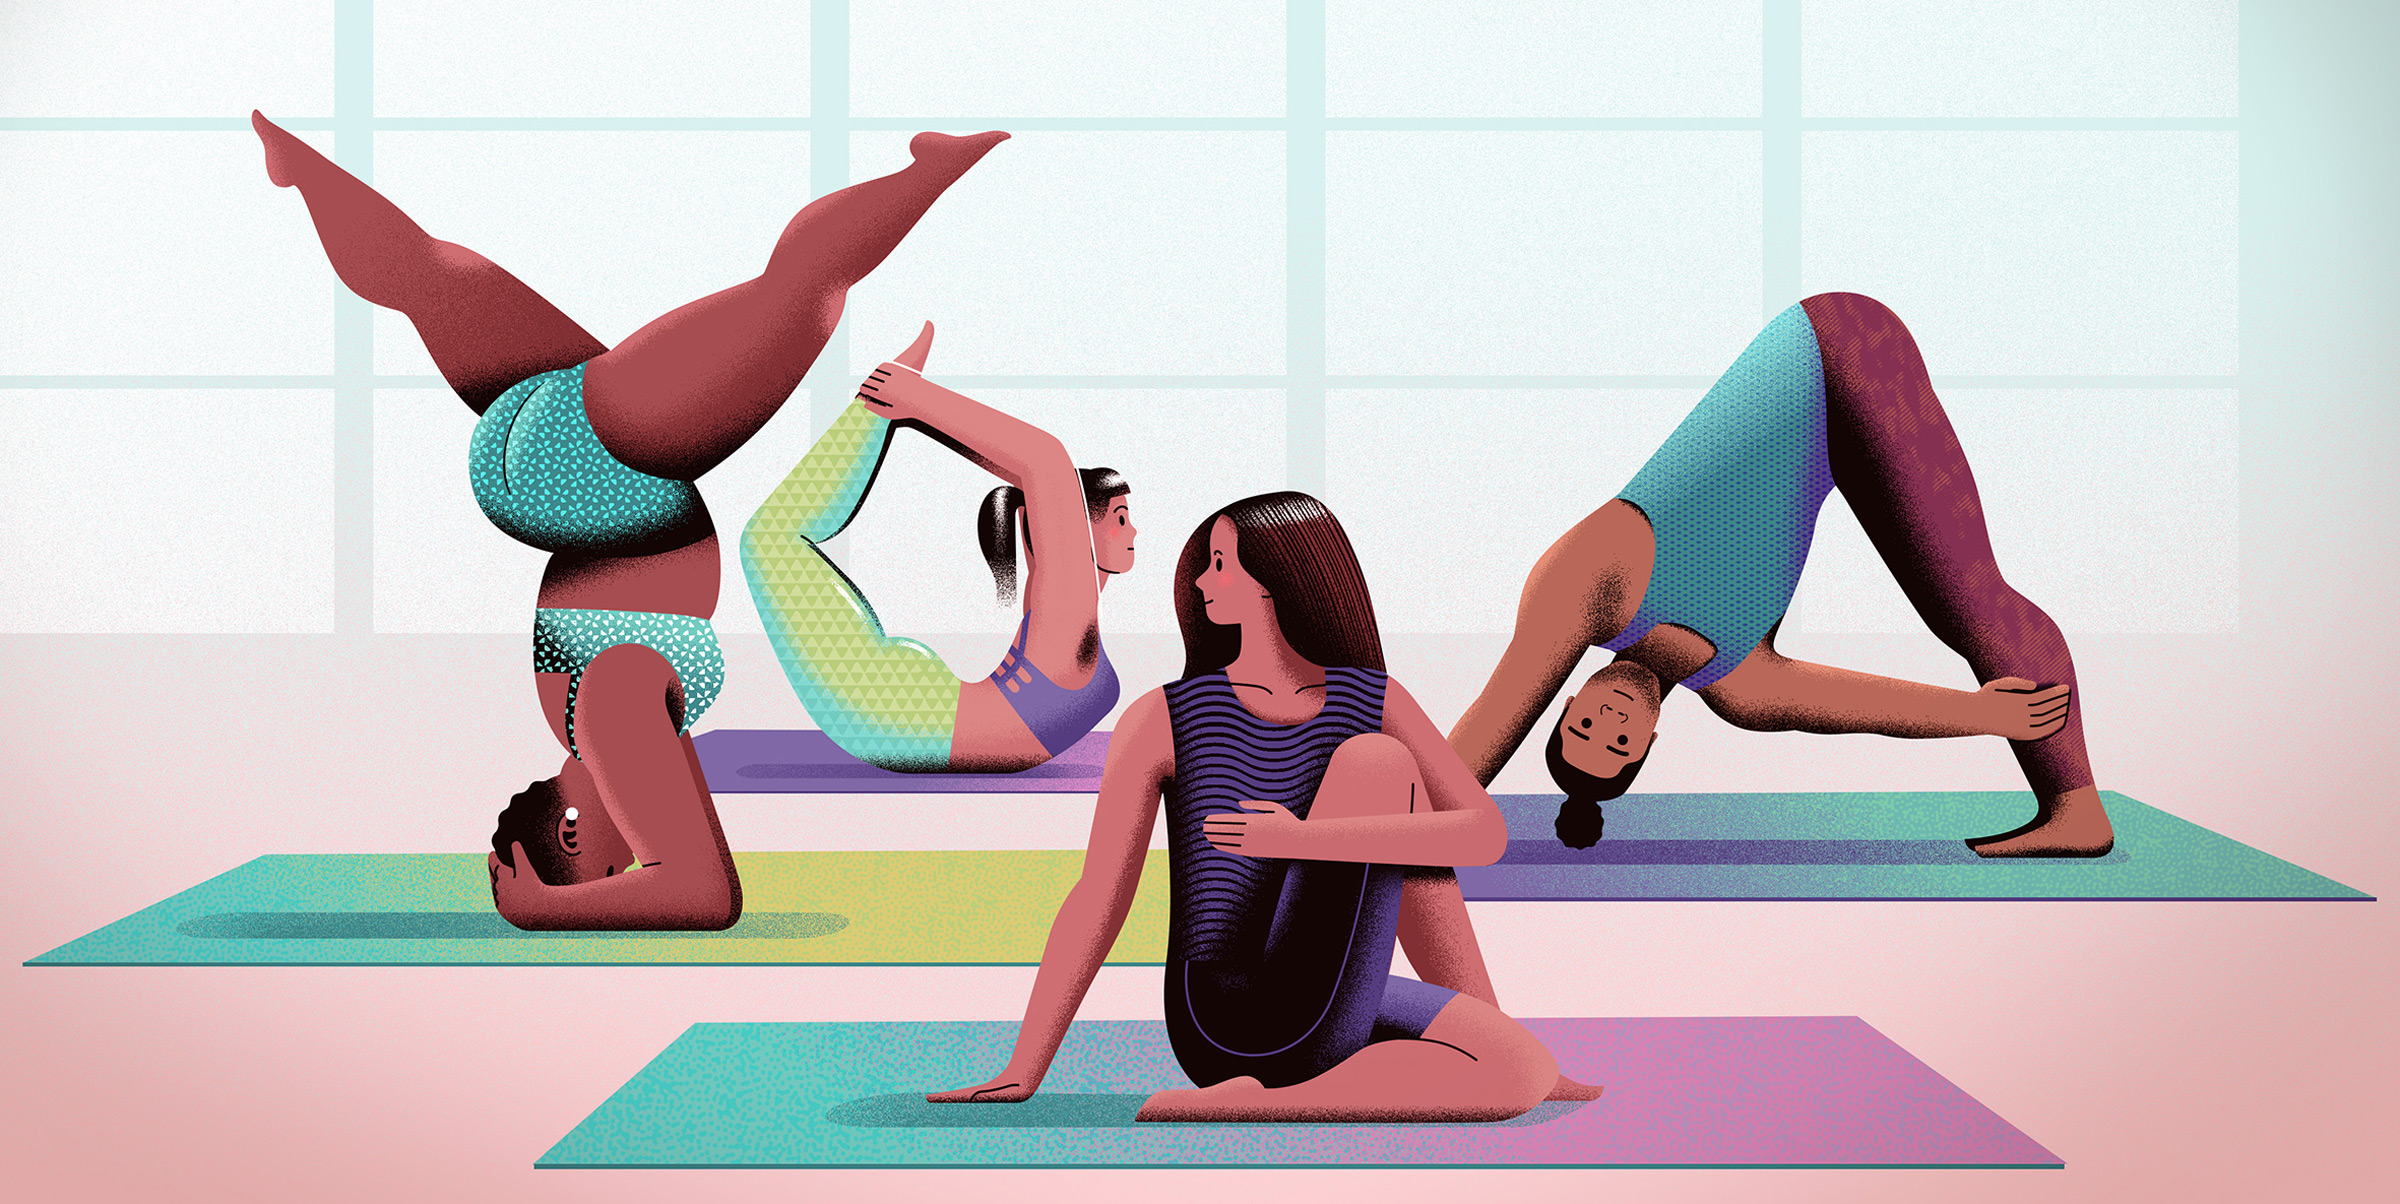 Illustration for International Day of Yoga